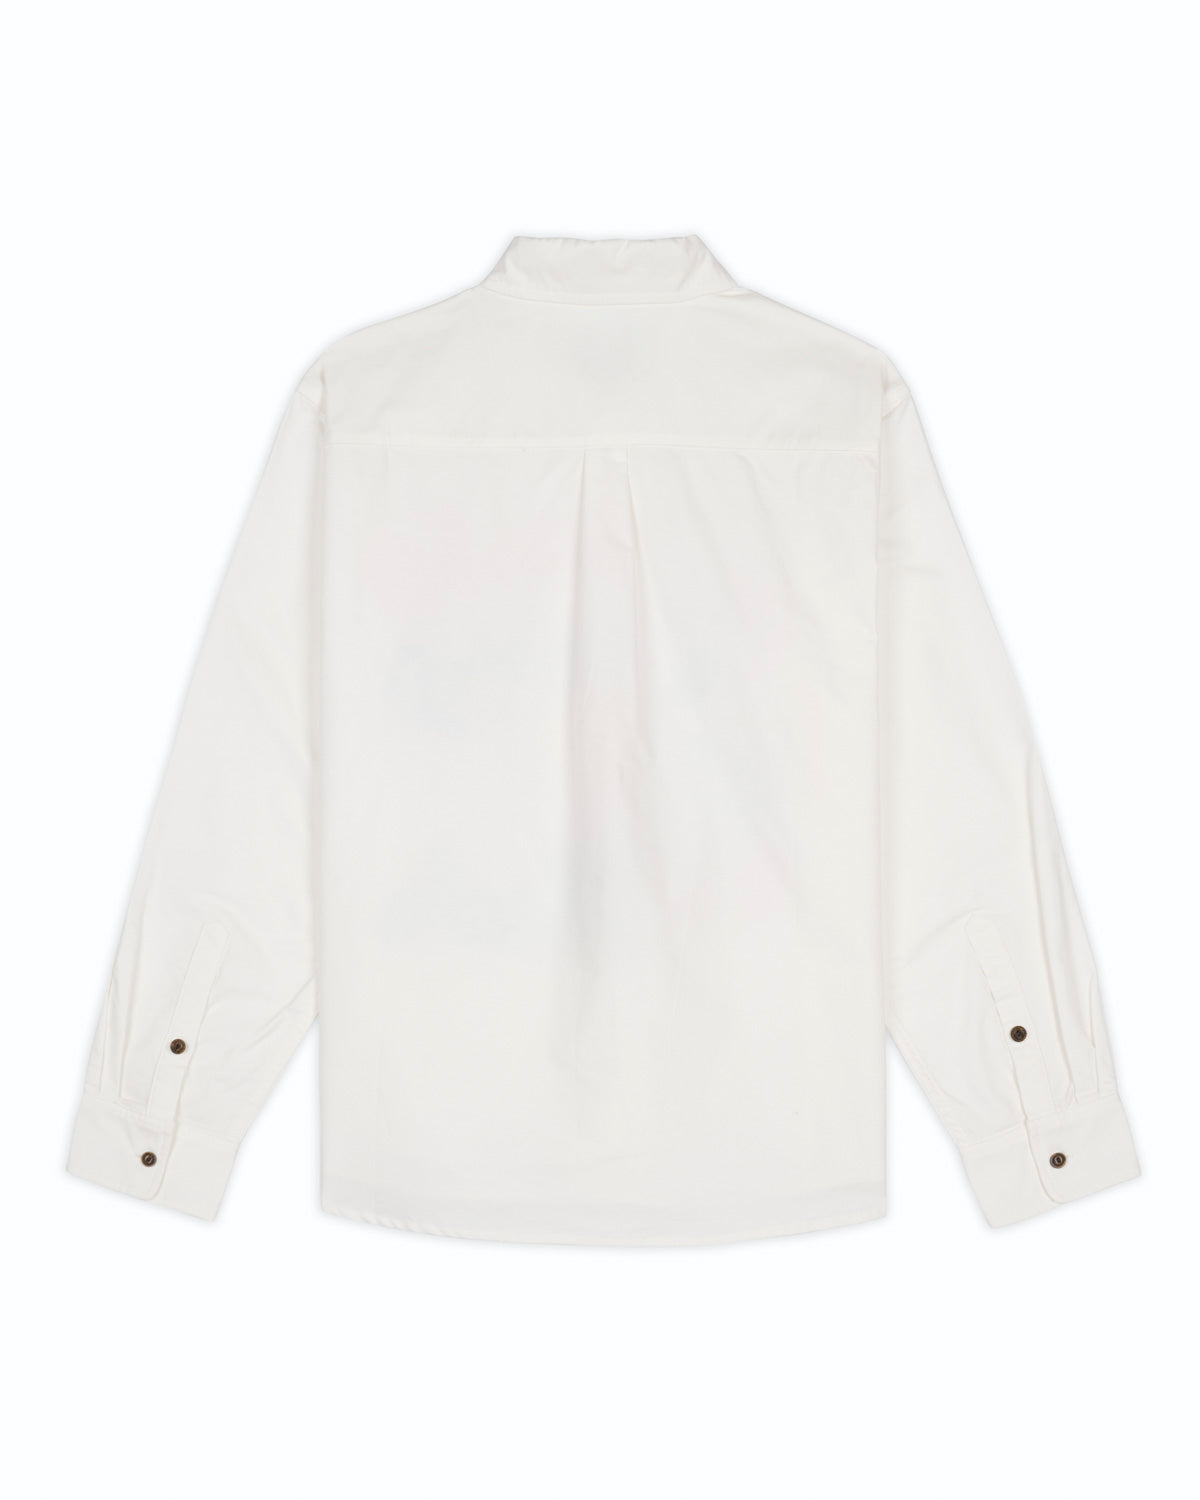 Alfie Cotton Oxford Shirt - White 2